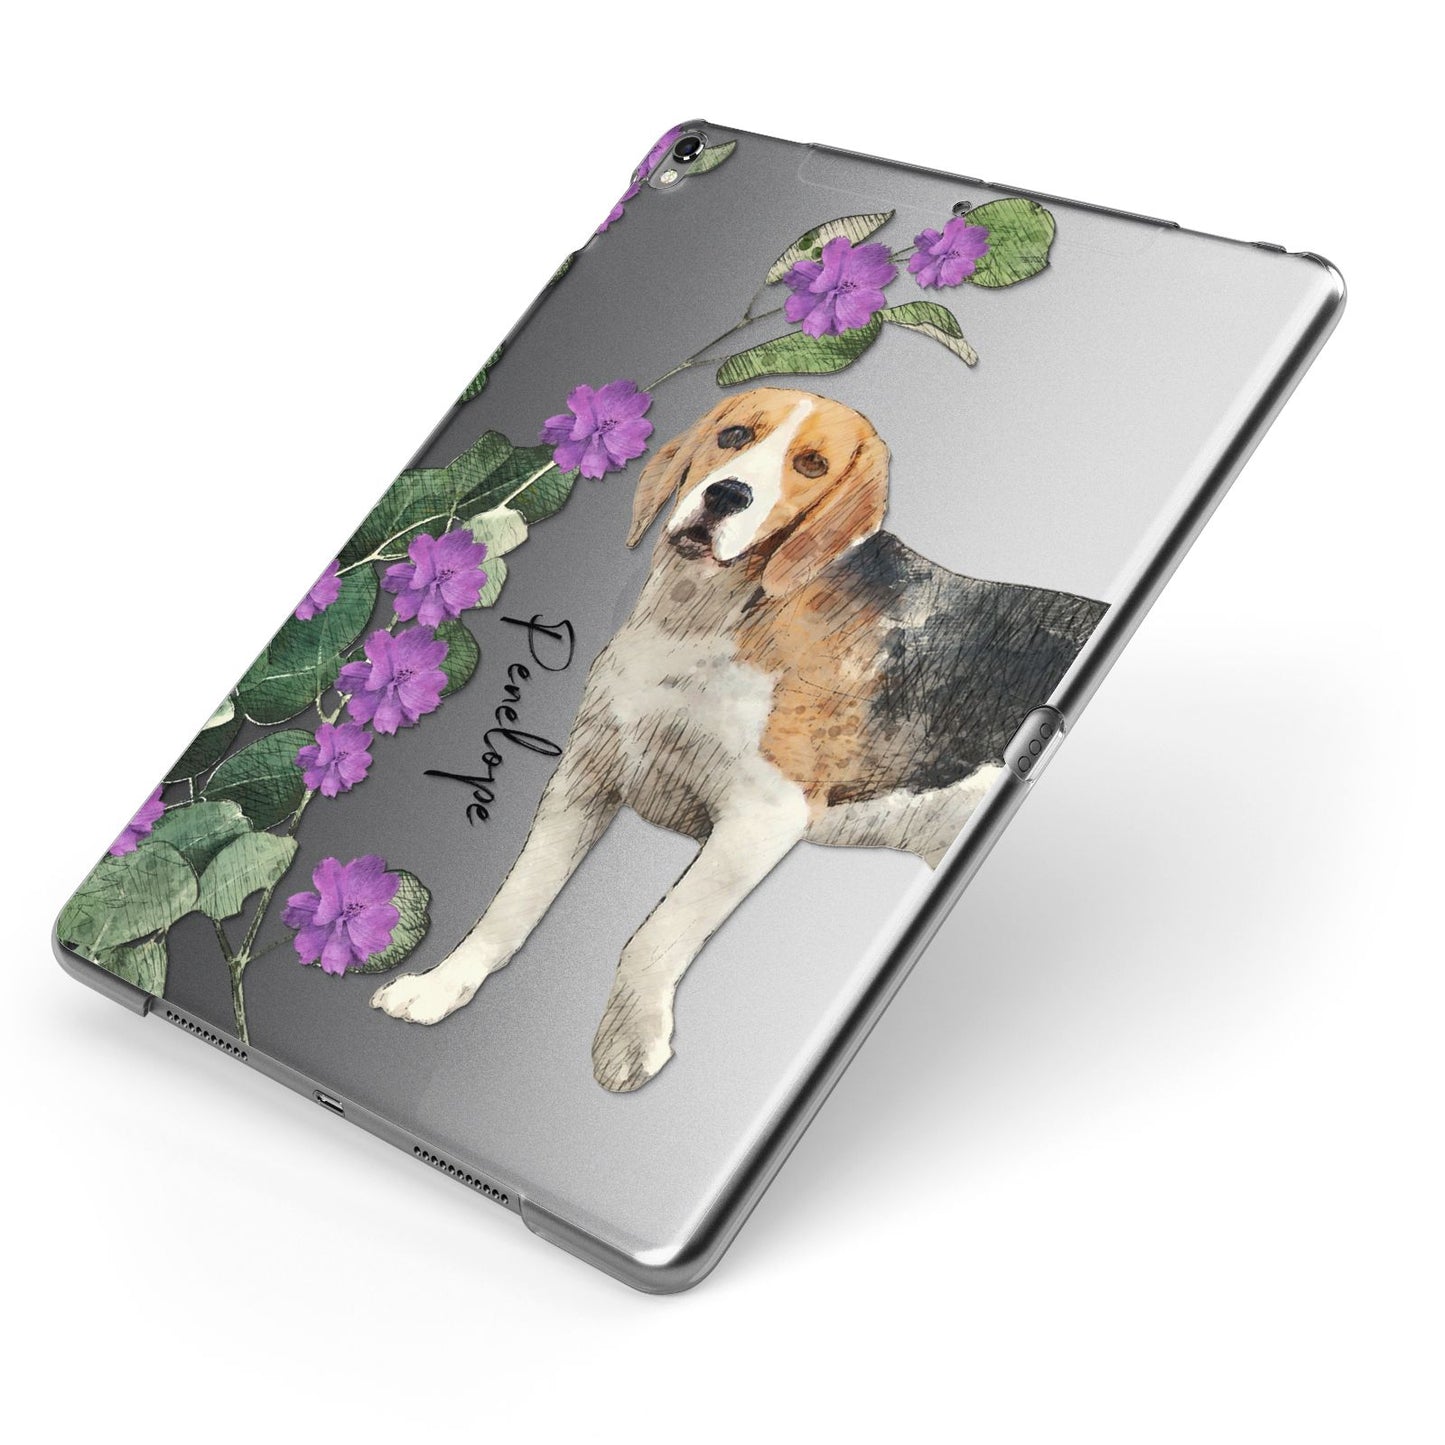 Personalised Dog Apple iPad Case on Grey iPad Side View